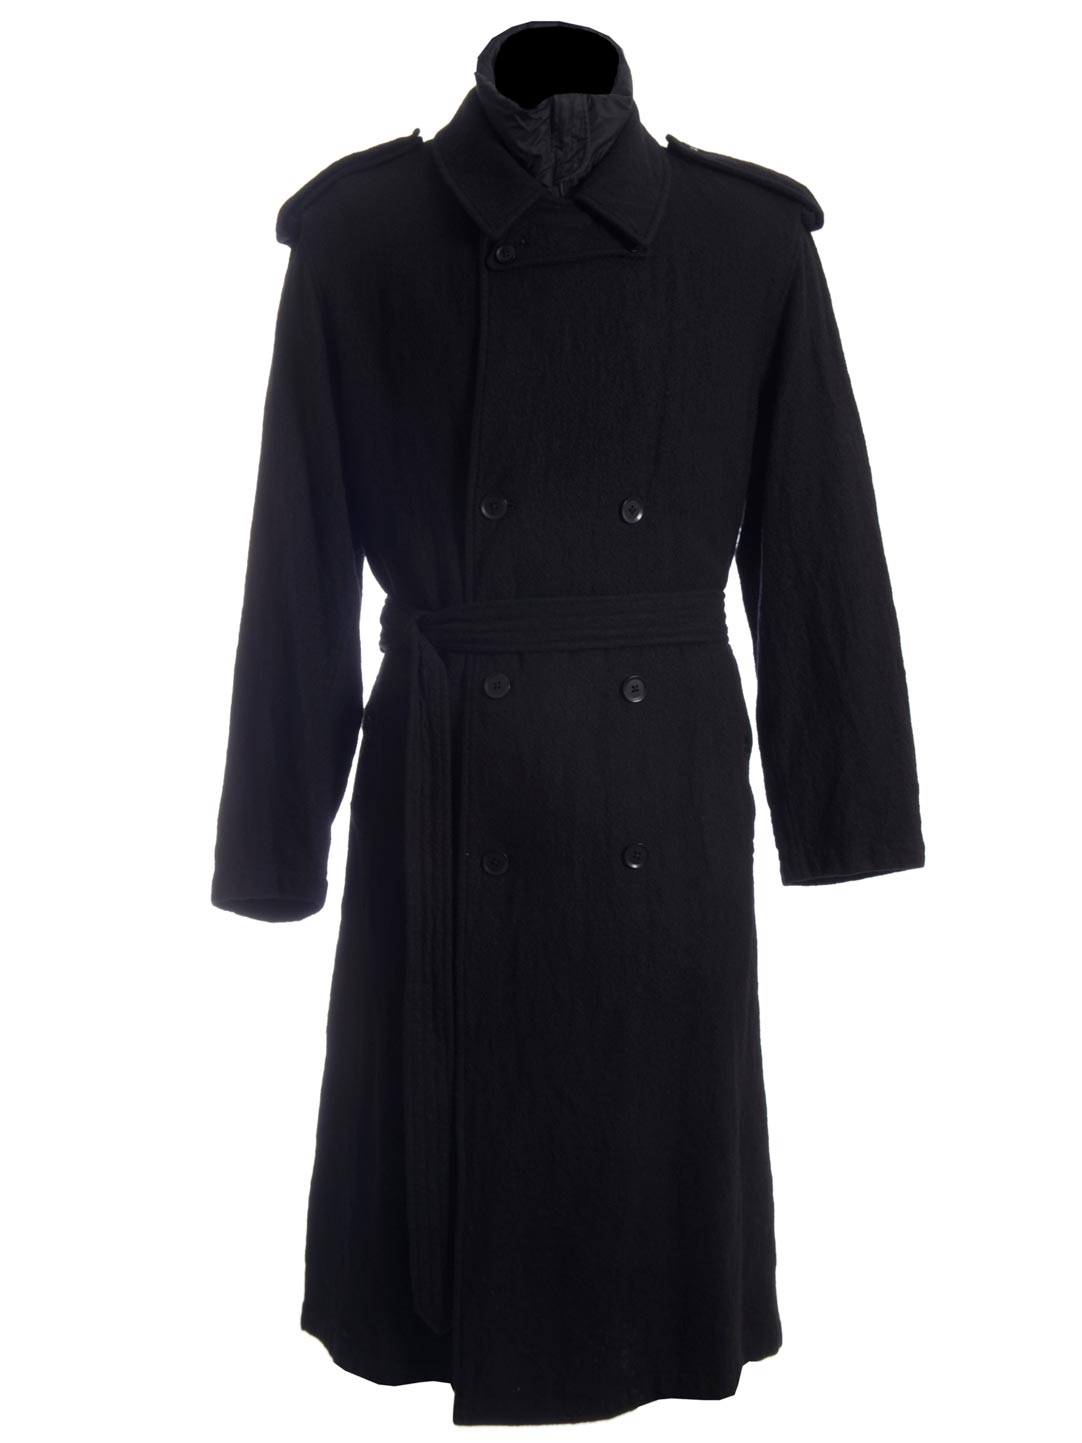 Yohji Yamamoto Mens Insulator Trench Coat in Black for Men - Lyst